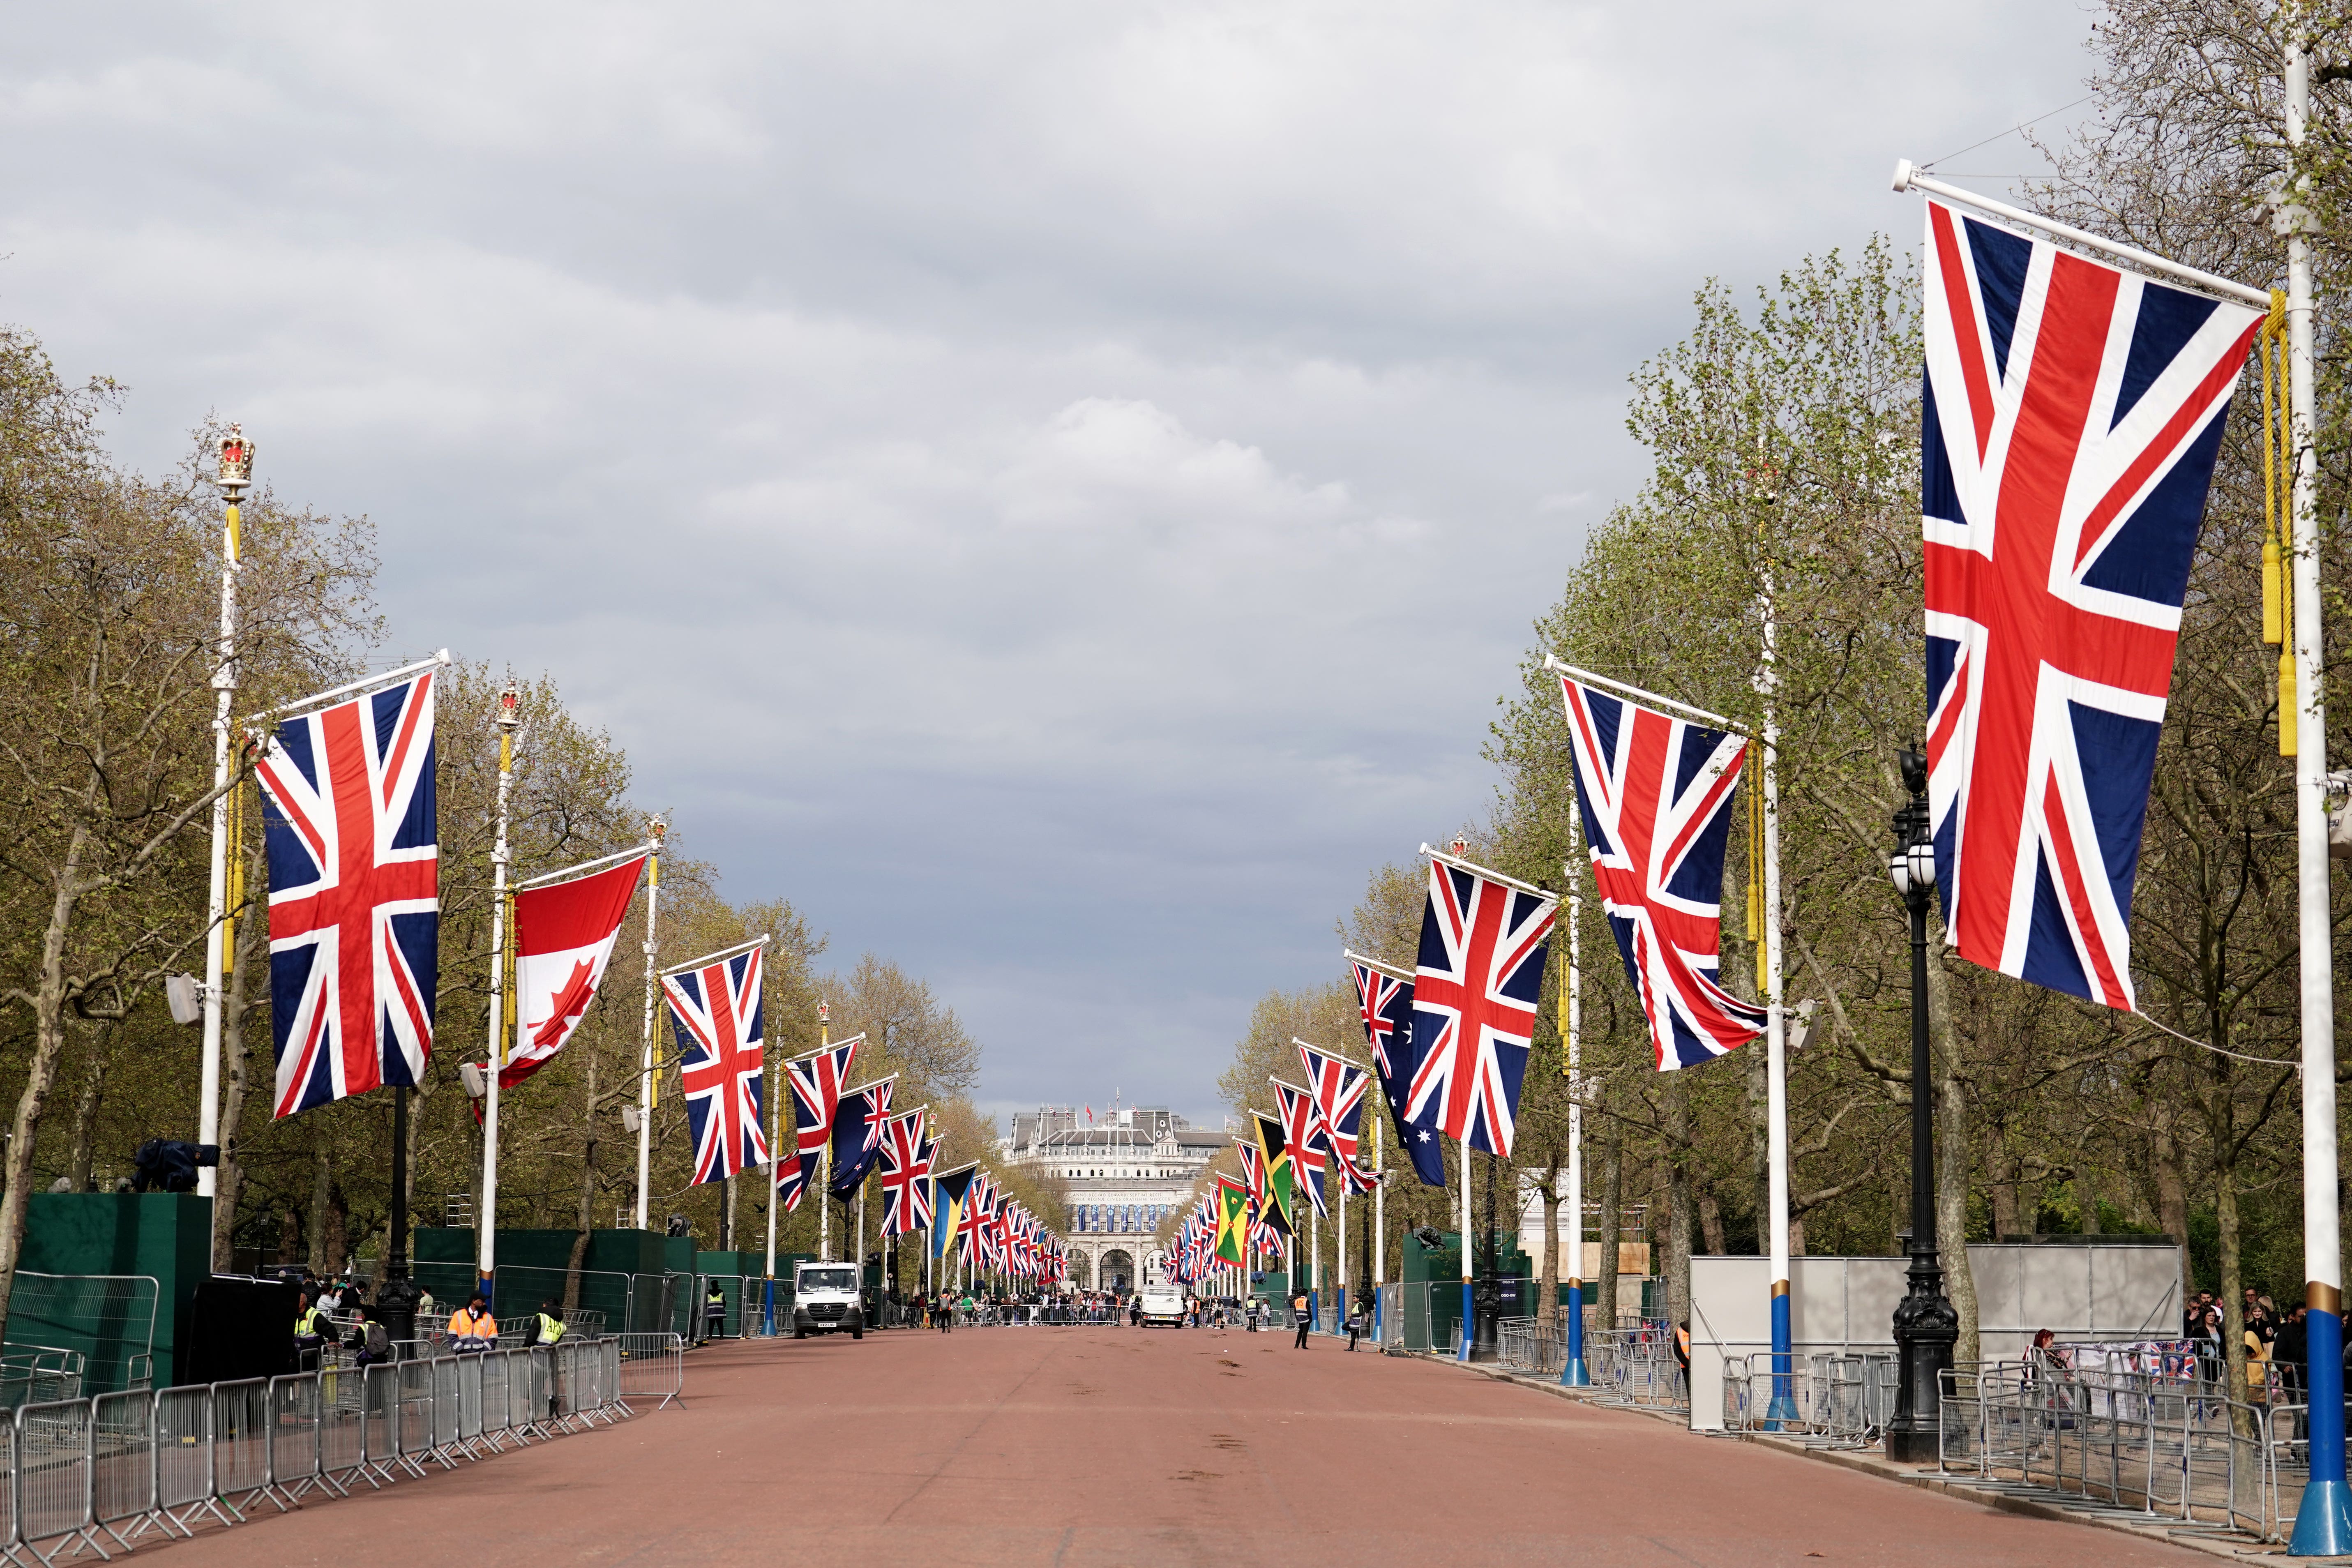 Union flags hang from the street furniture outside Buckingham Palace on the Mall (Jordan Pettitt/PA)